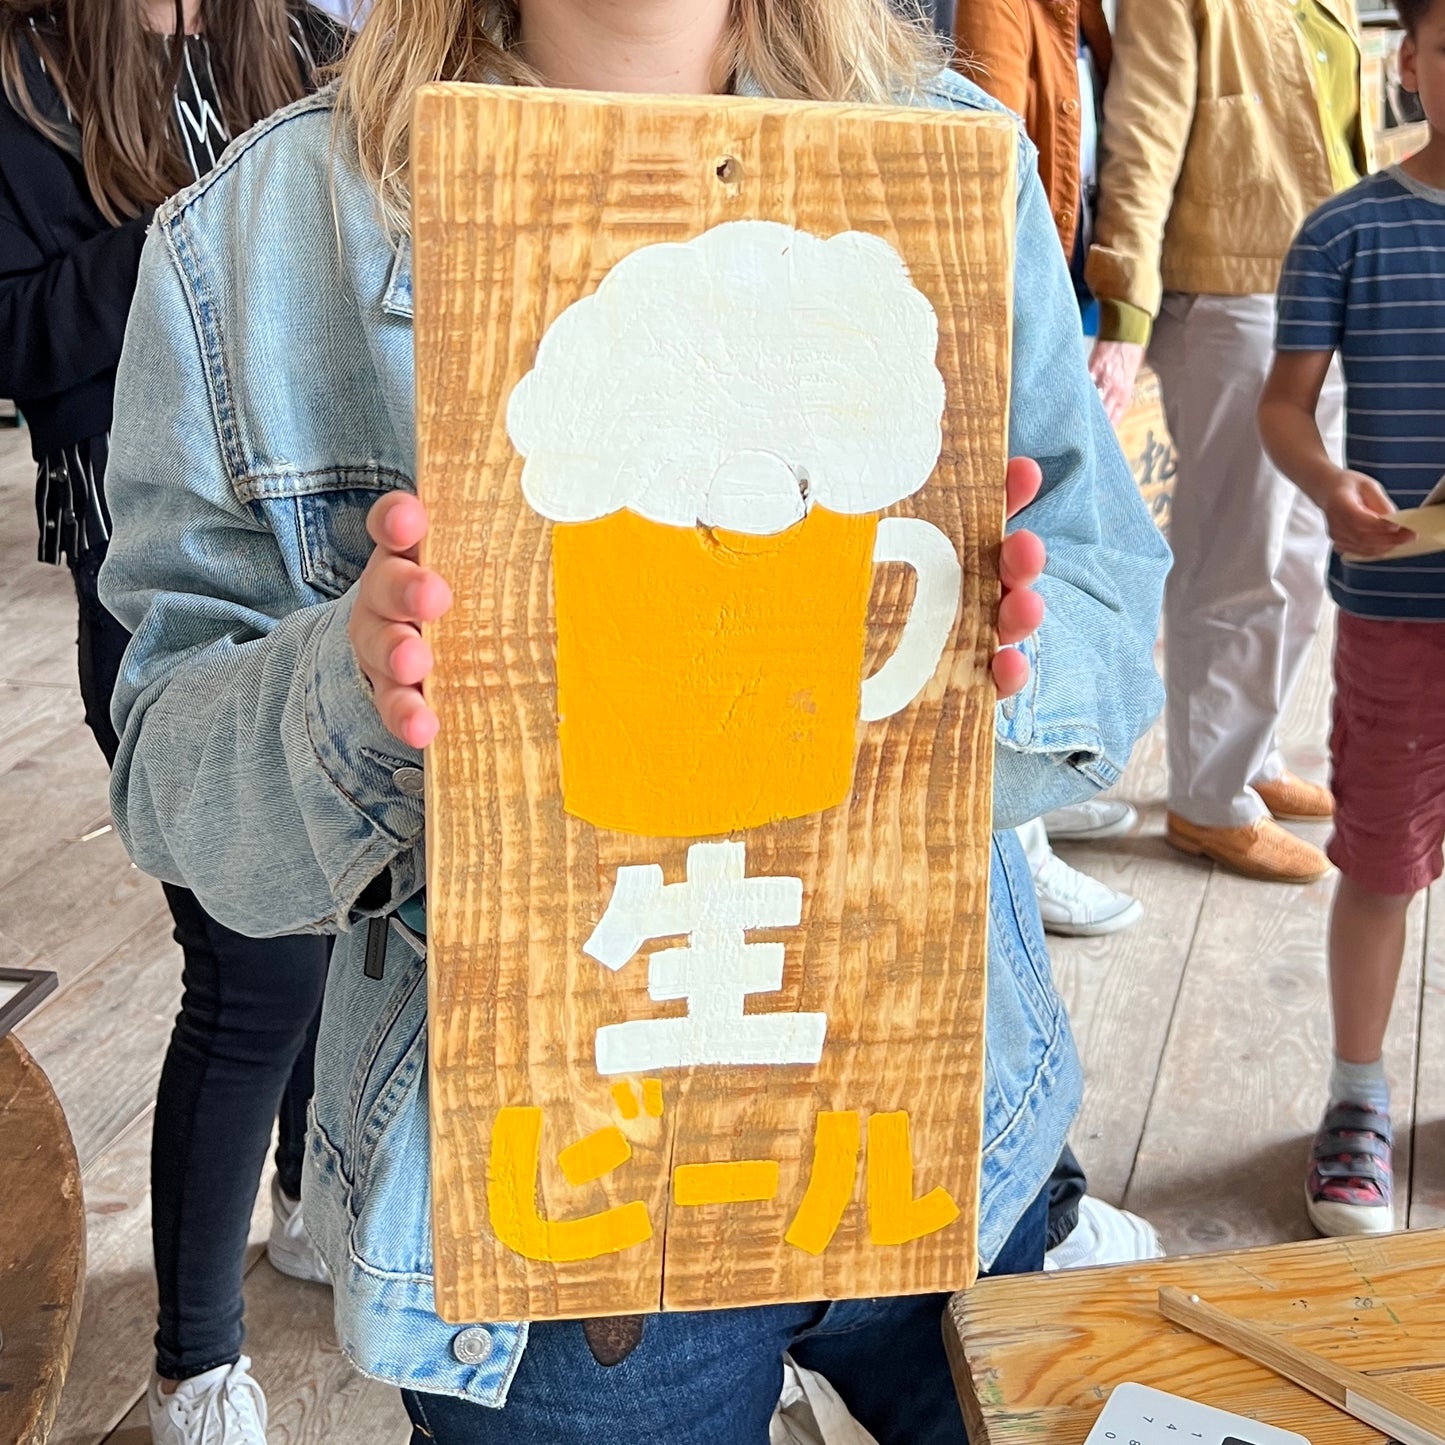 Beer Sign